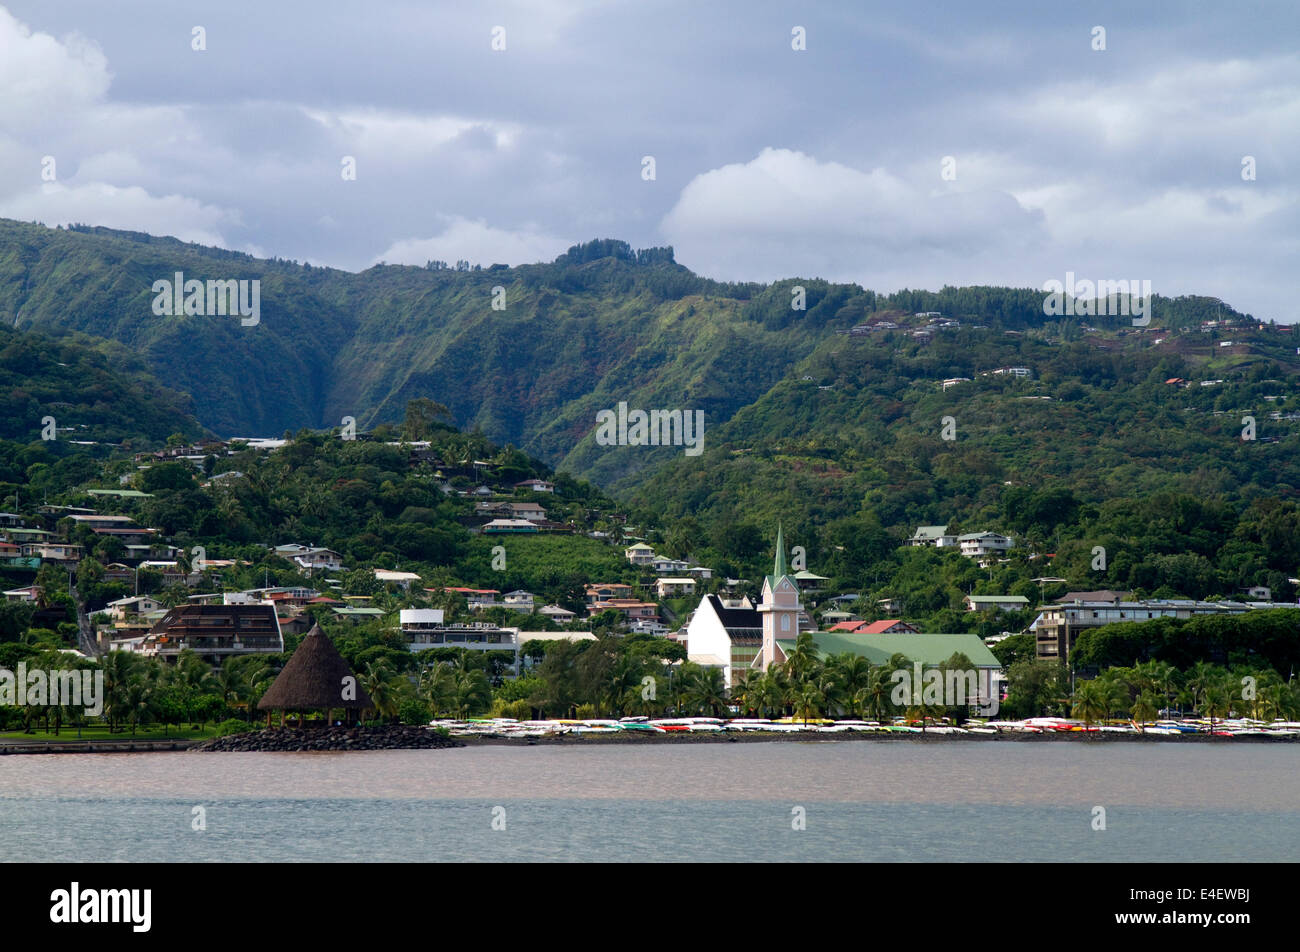 View of the city of Papeete, Tahiti, French Polynesia. Stock Photo